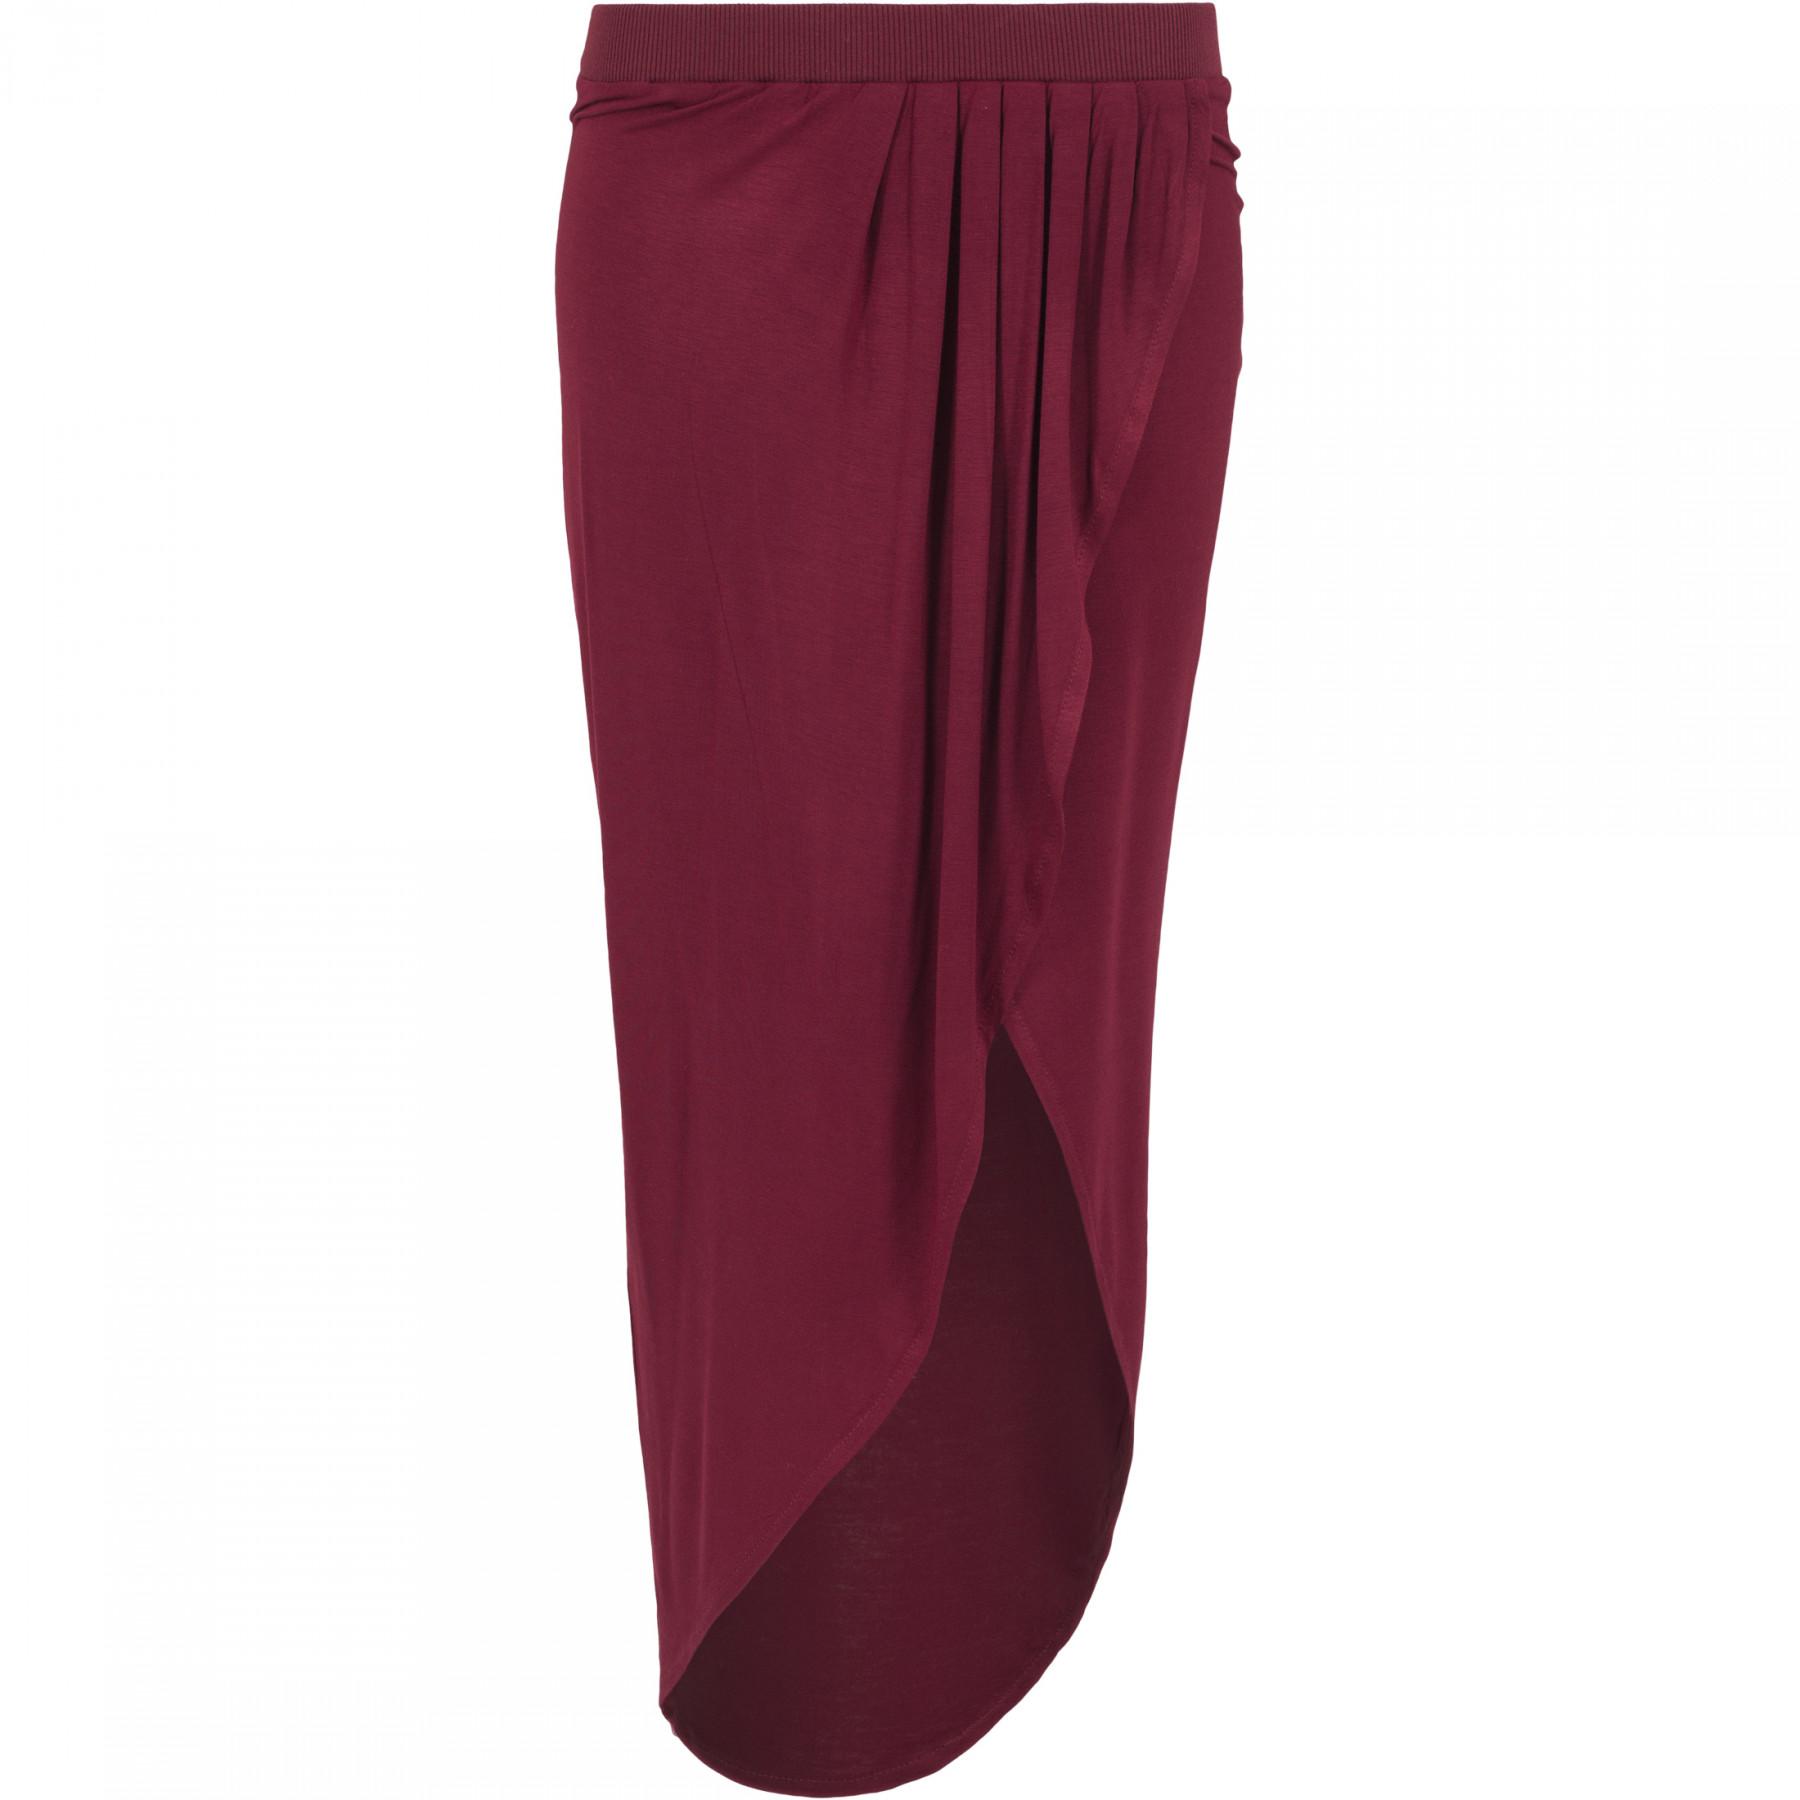 Women's Urban Classic long vicon skirt